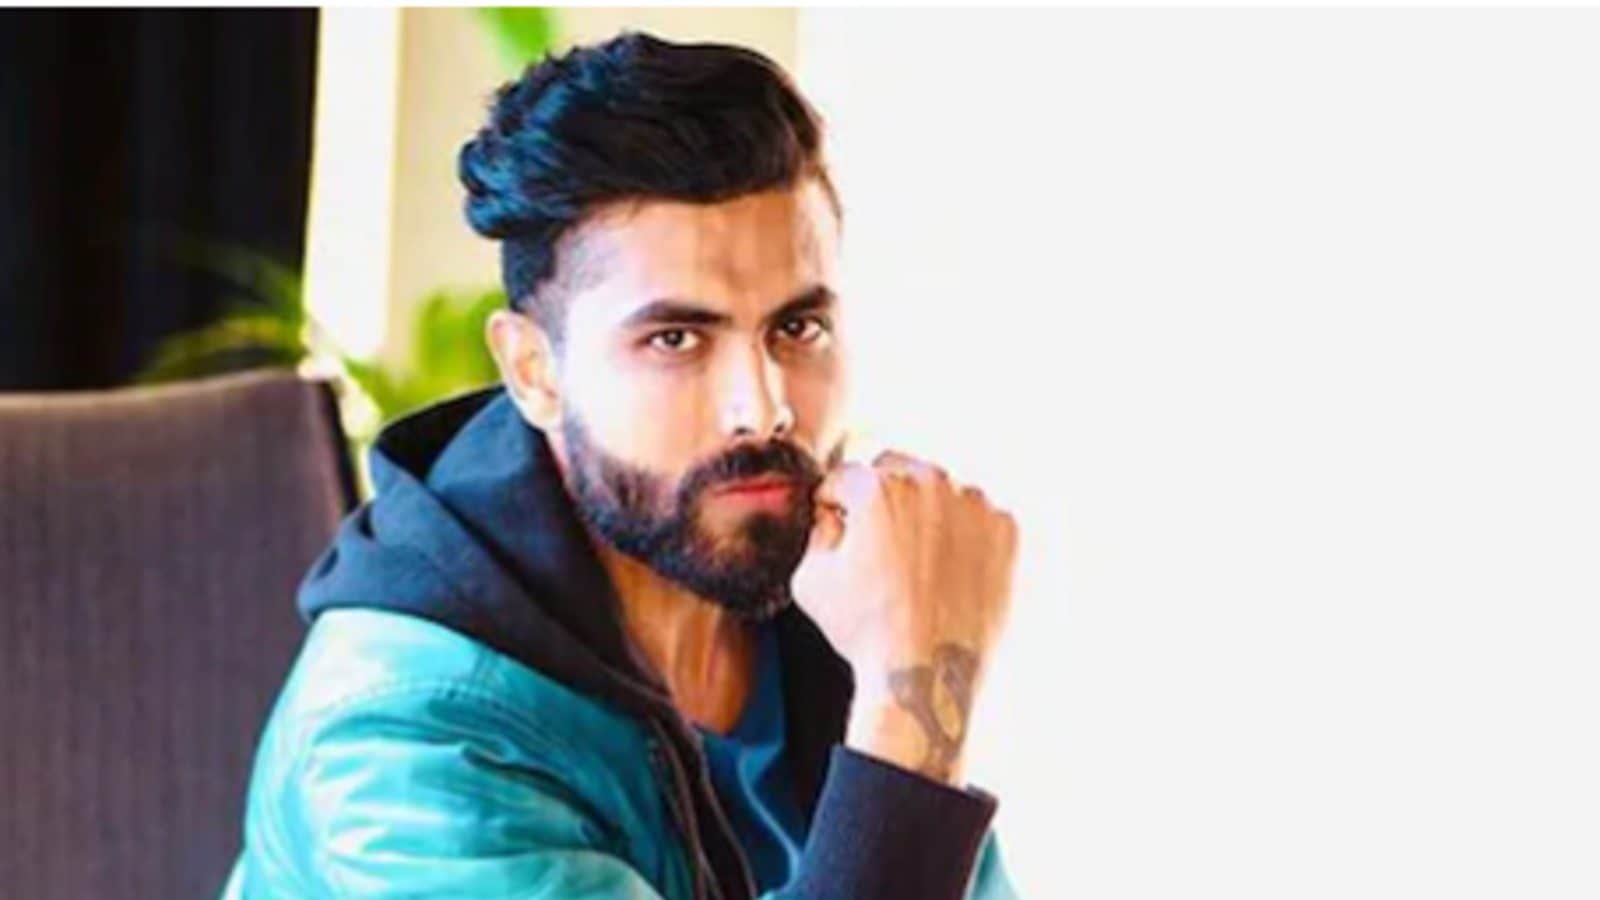 top 5 Indian cricketers beard hairstyle change your look Take ideas see  photos jadeja kohli dhoni mpsn  टप5 इडयन करकटरस क हयरसटइल स  ल आइडय बदल दग आपक लक PHOTOS  Hindi News